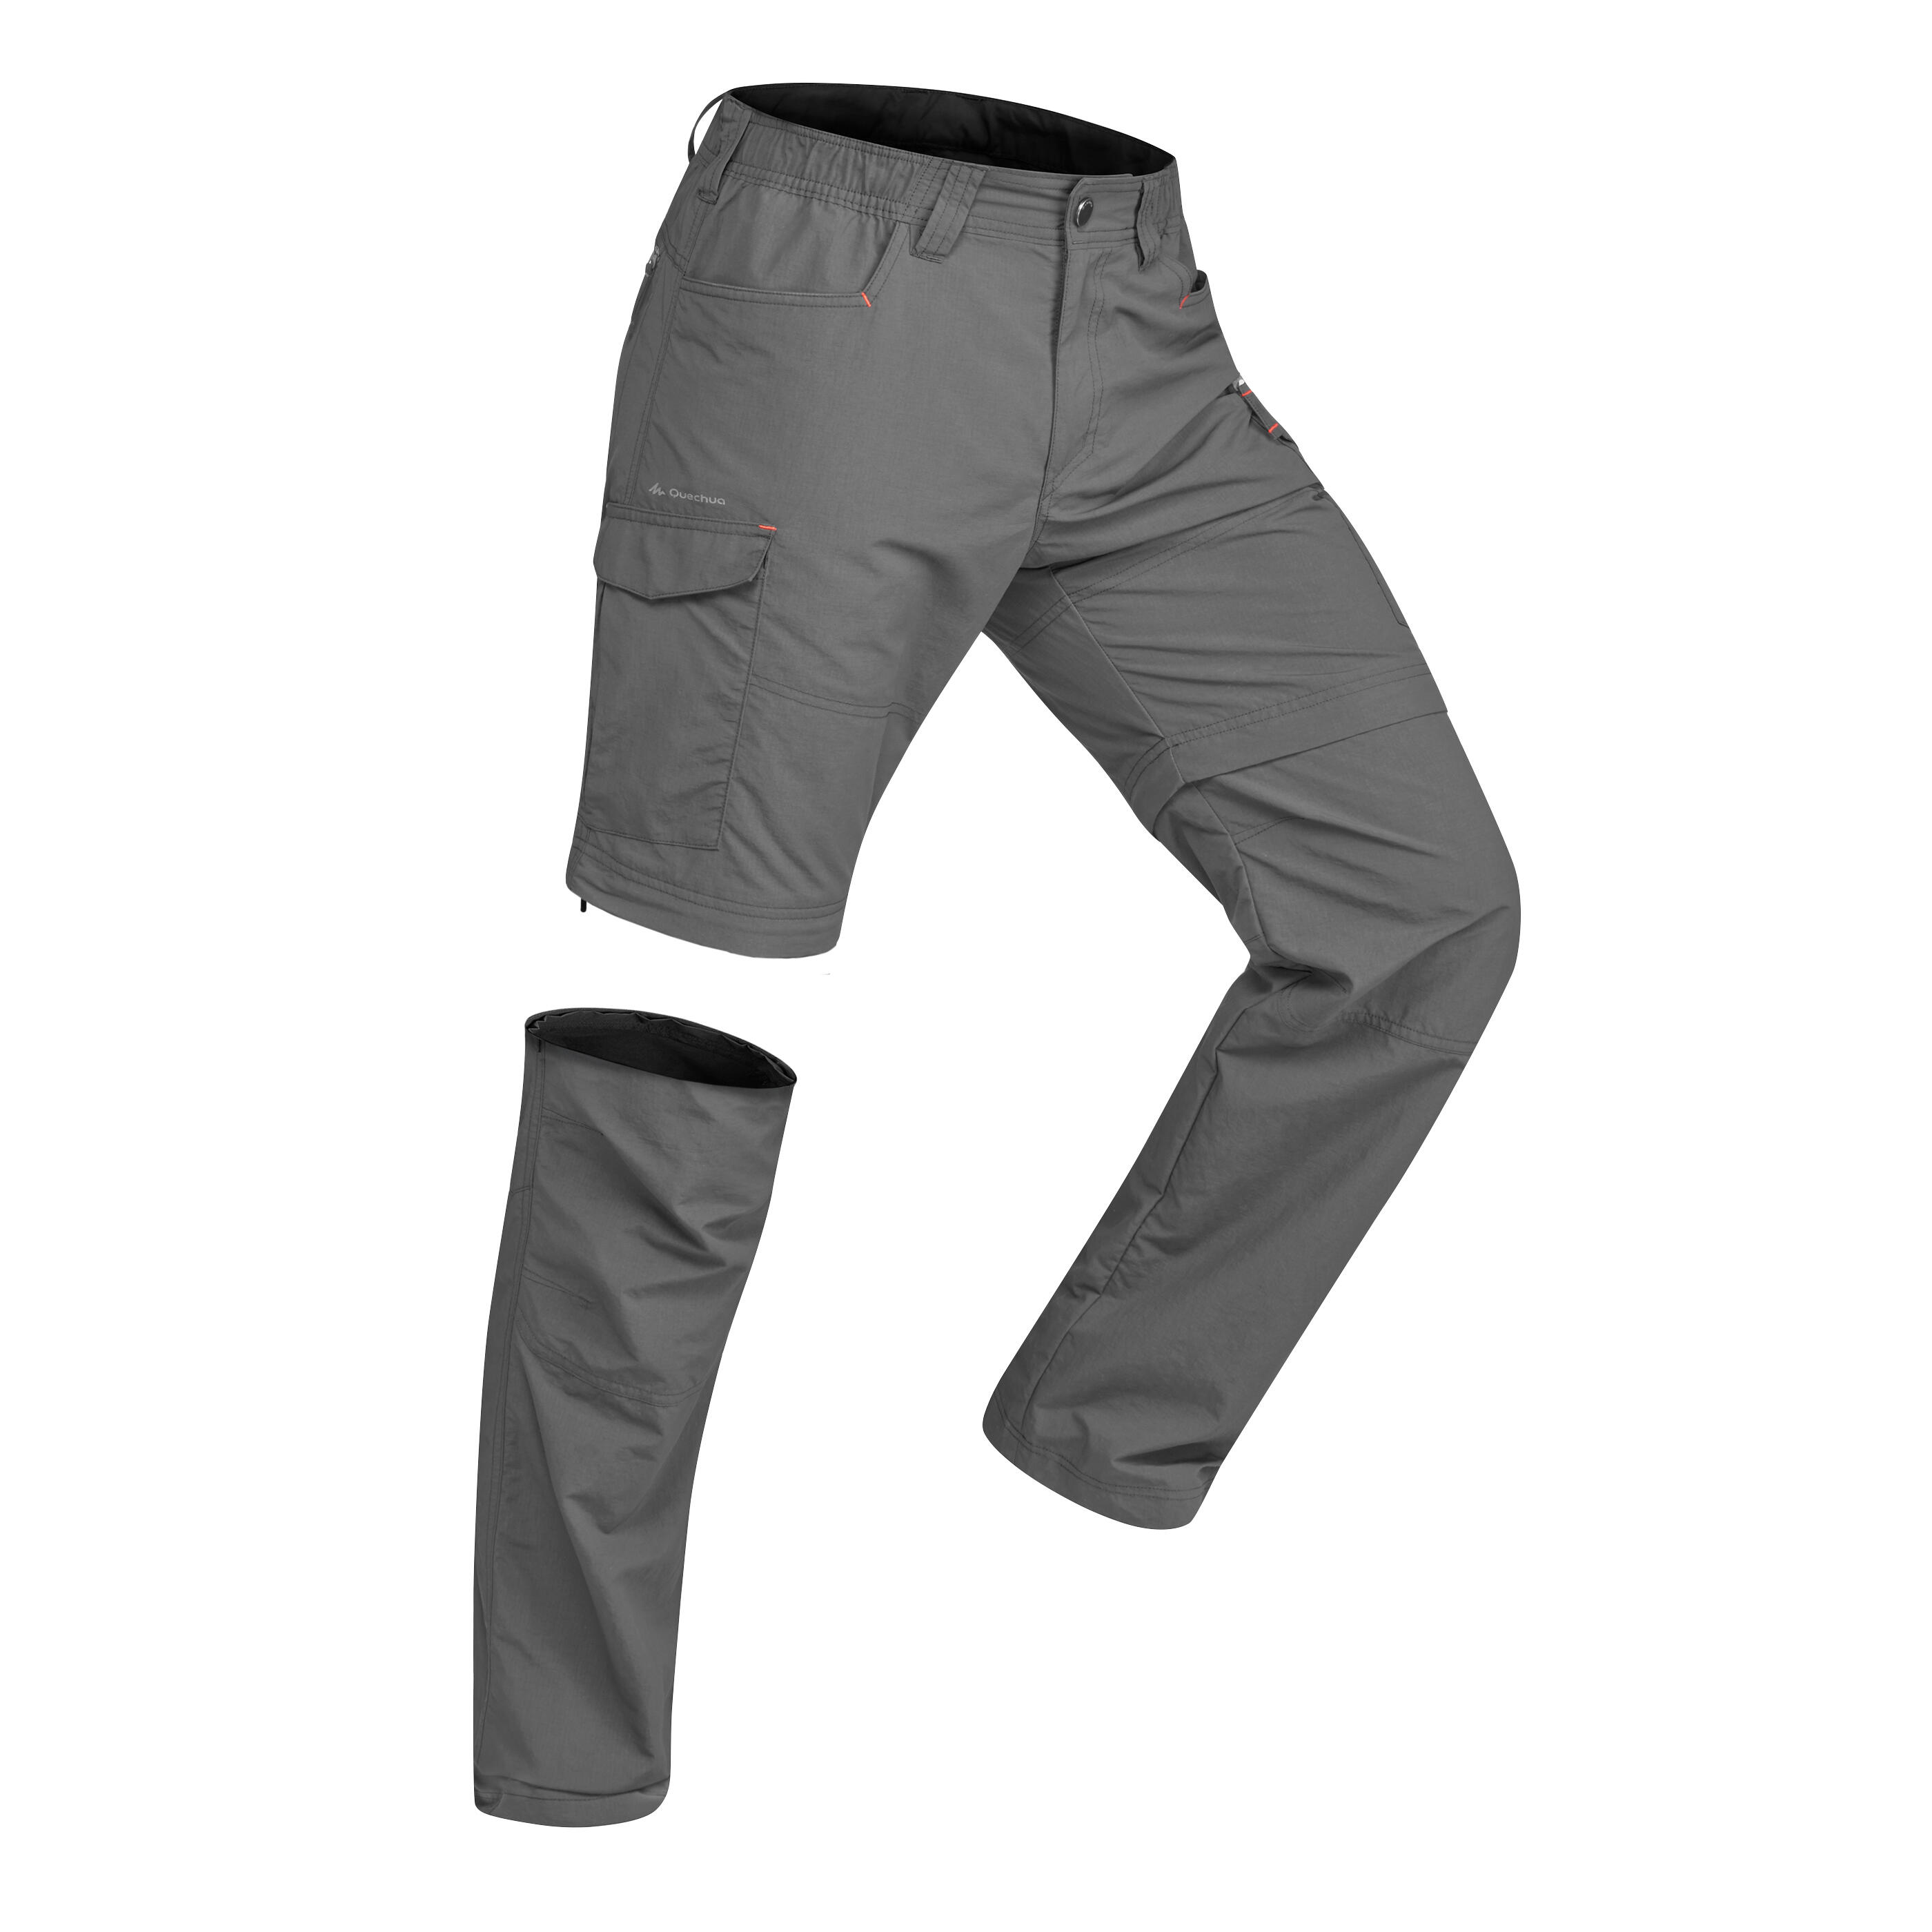 decathlon winter trousers